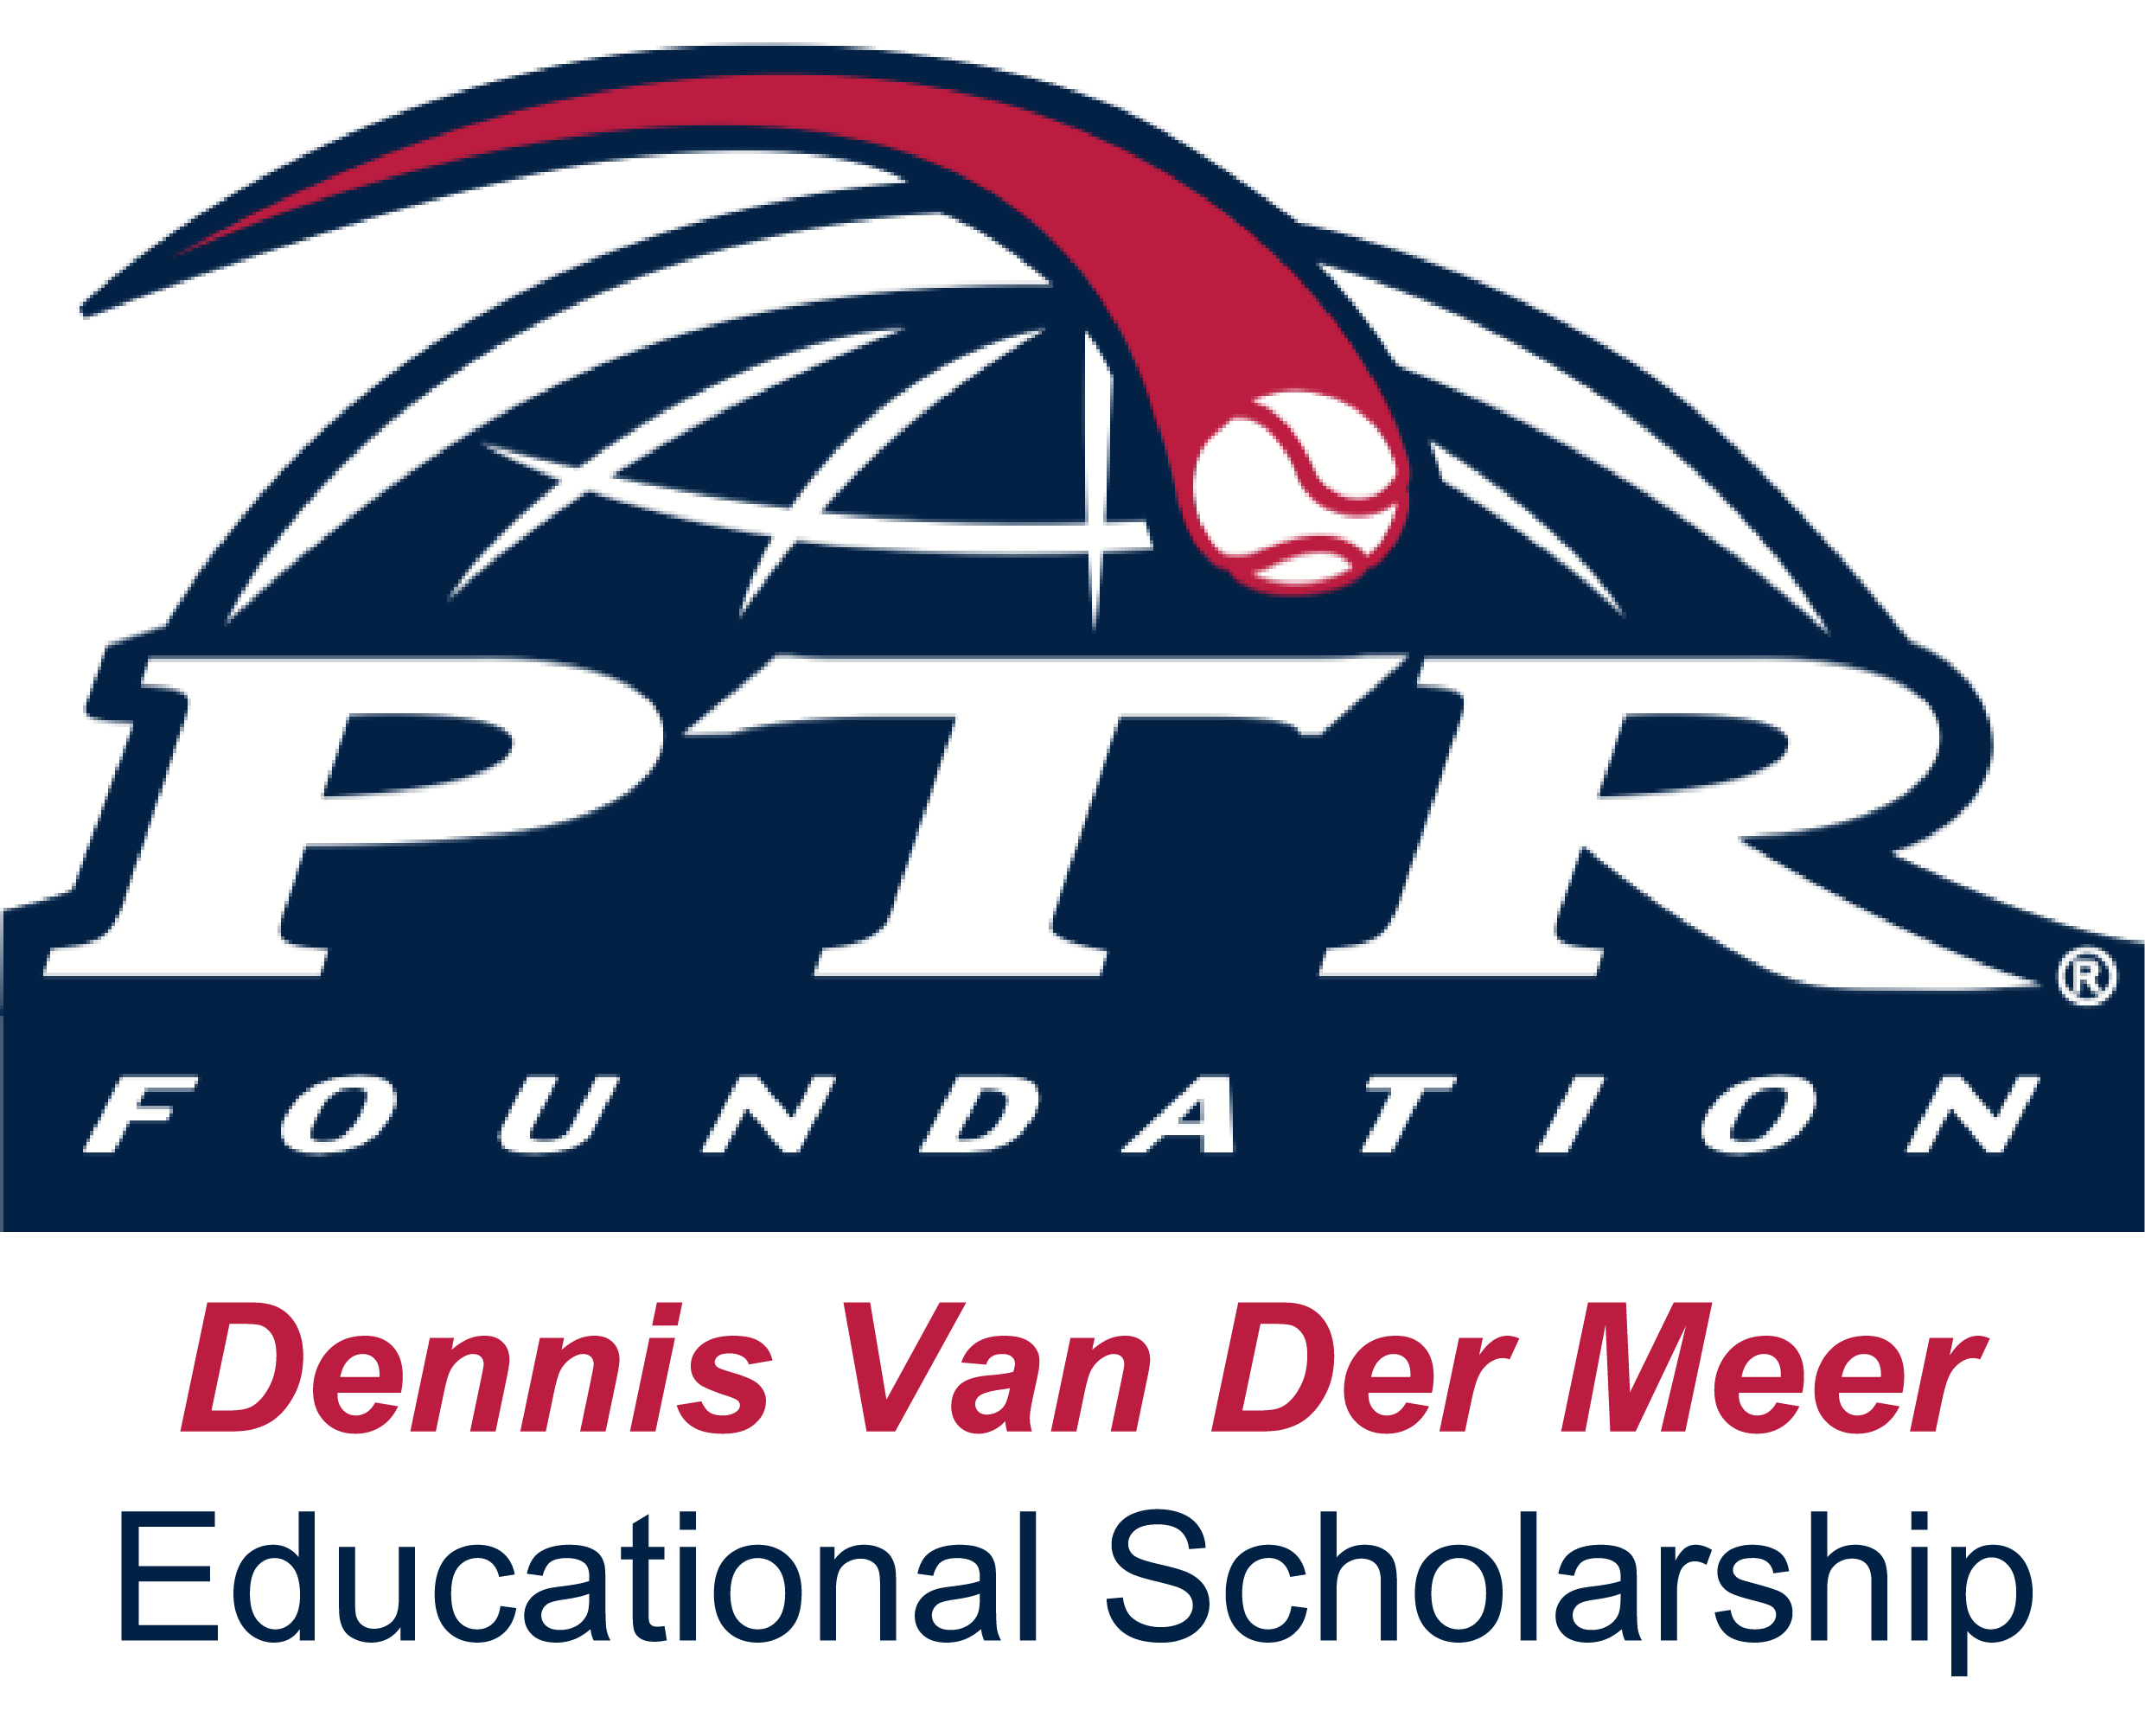 Dennis Van Der Meer Educational Scholarship